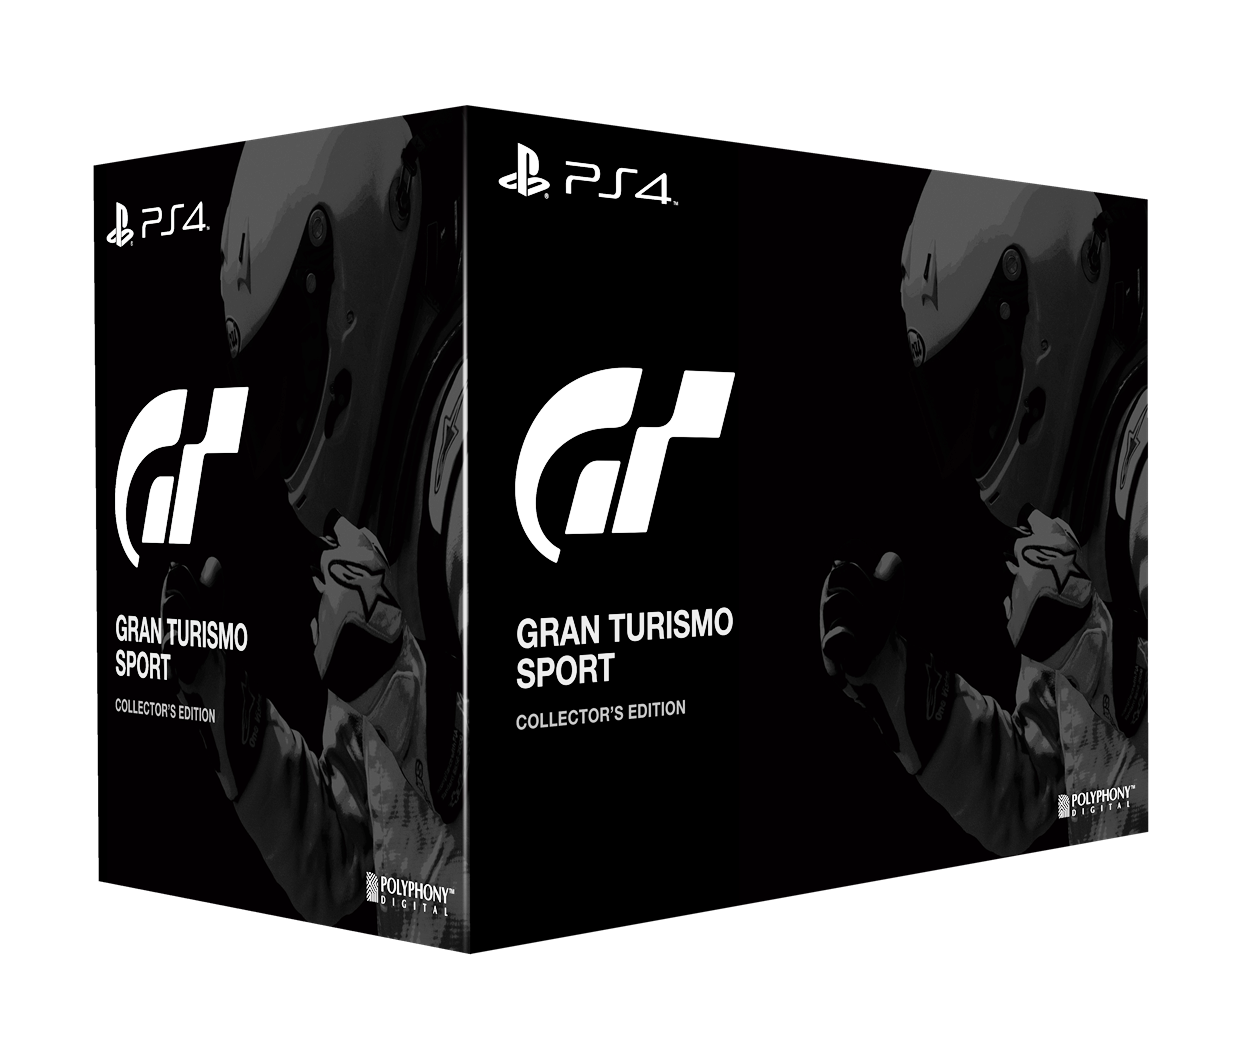 gt se box idea resized1 เกมเอ็กซ์คลูซีฟของ “PlayStation®4   “Gran Turismo Sport  เริ่มสั่งซื้อล่วงหน้าได้วันที่ 30 กรกฎาคม พร้อมรับของสมนาคุณสำหรับการสั่งซื้อล่วงหน้าเป็นร่มแบบพิเศษหรือคอนเทนต์ดาวน์โหลดโบนัส